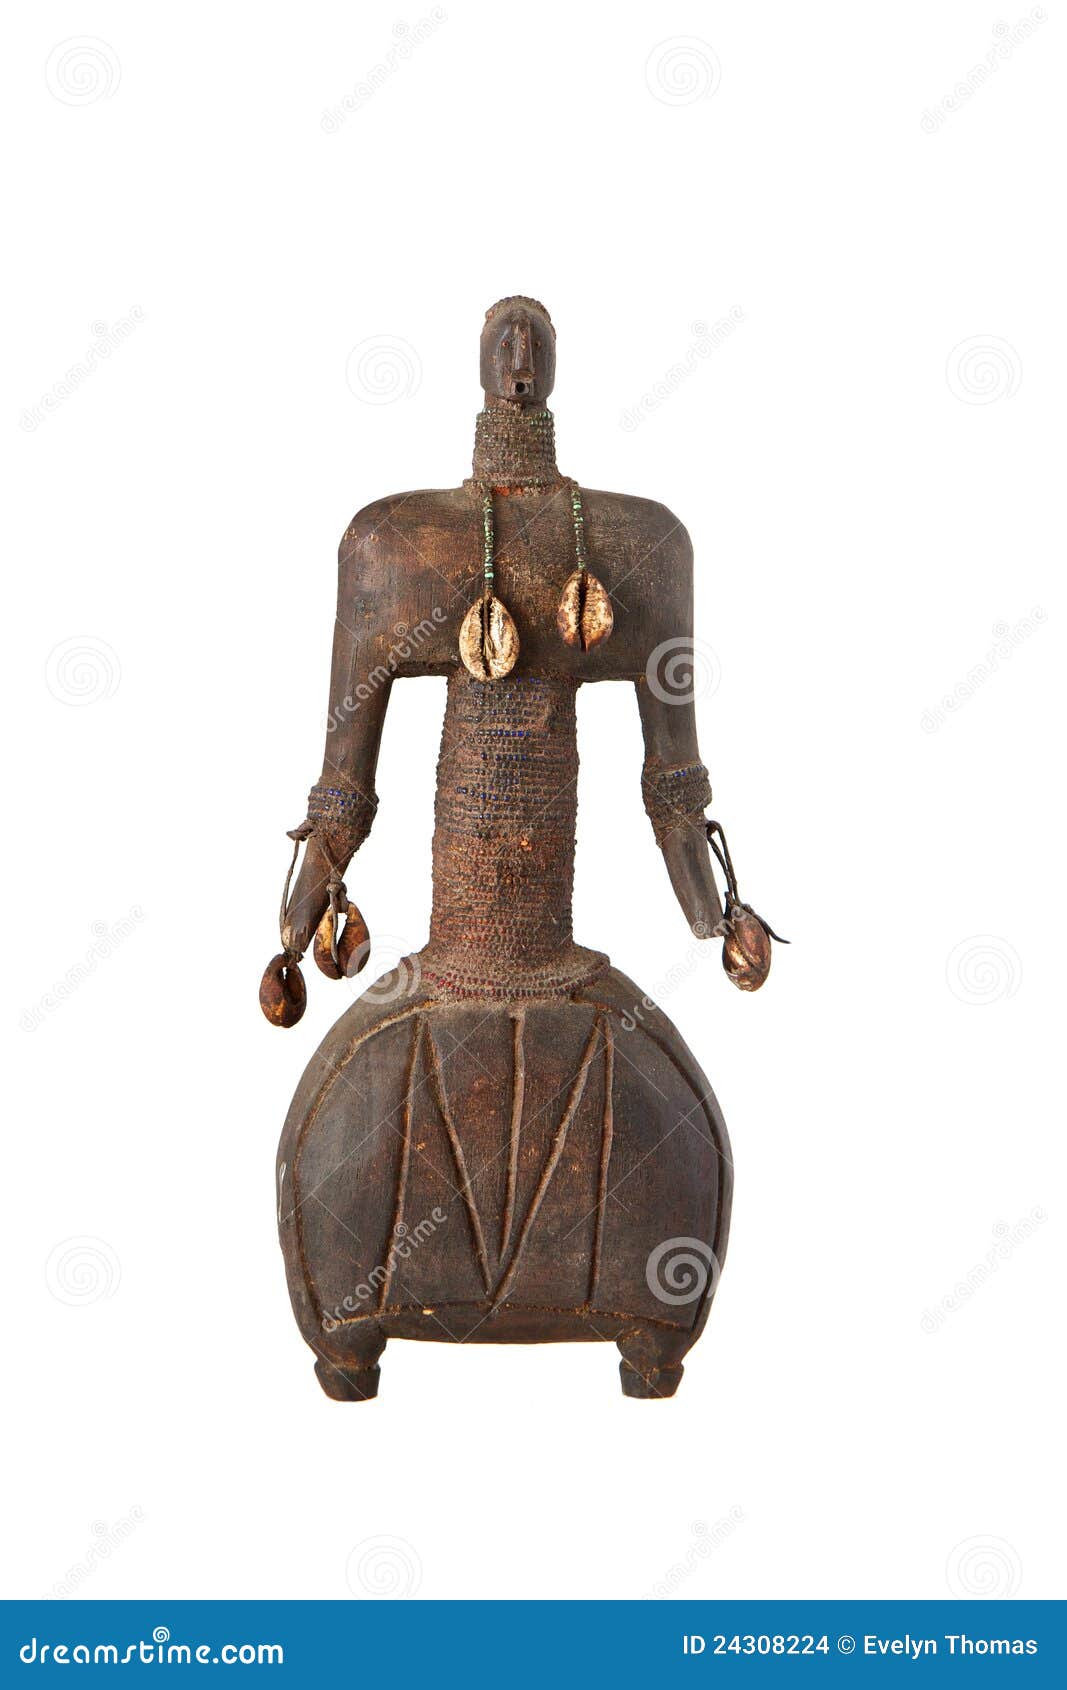 african artifact of a man